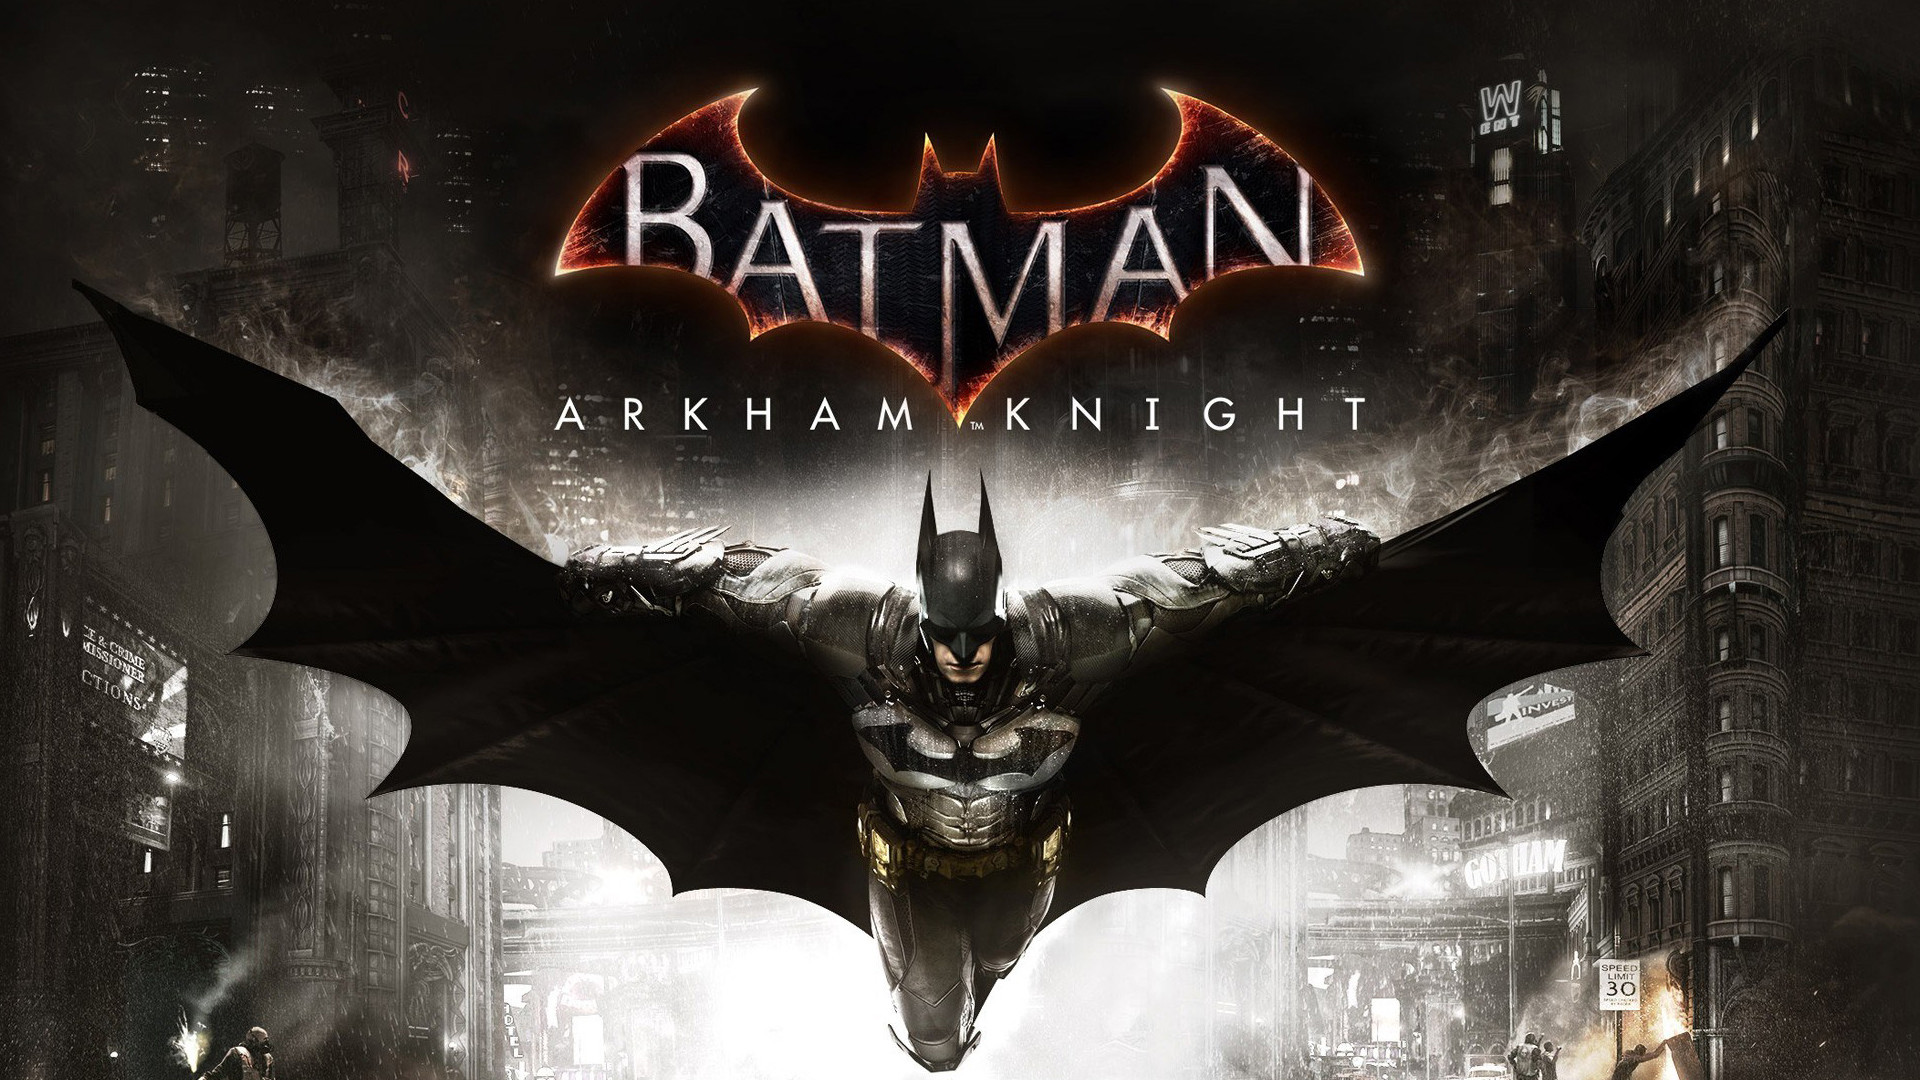 1920x1080 Awesome Batman Arkham Knight Wallpaper 46776